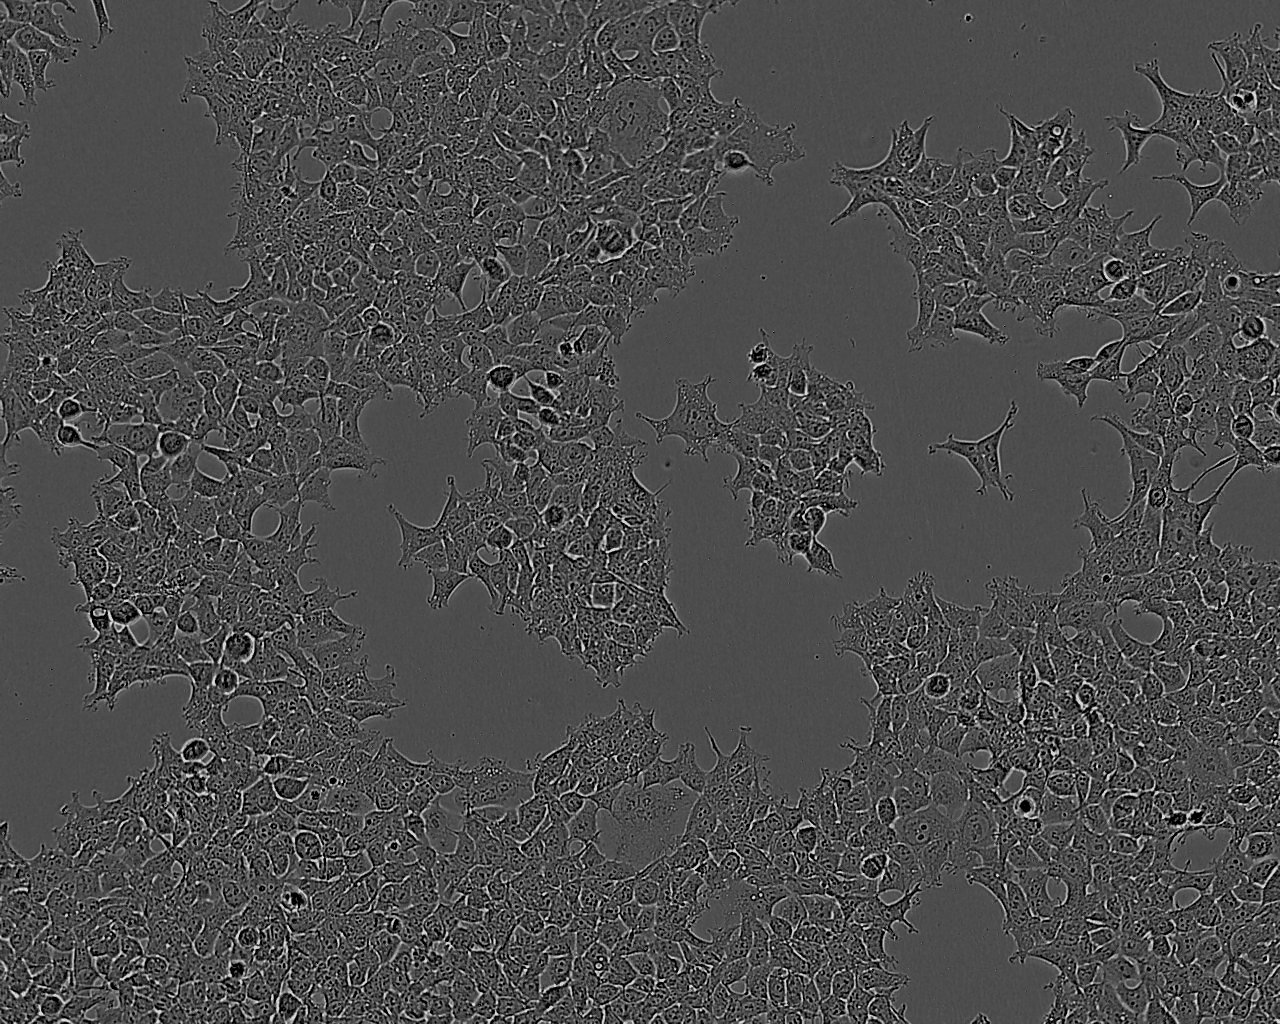 ARPE-19 Cells|人视网膜色素上皮需消化细胞系